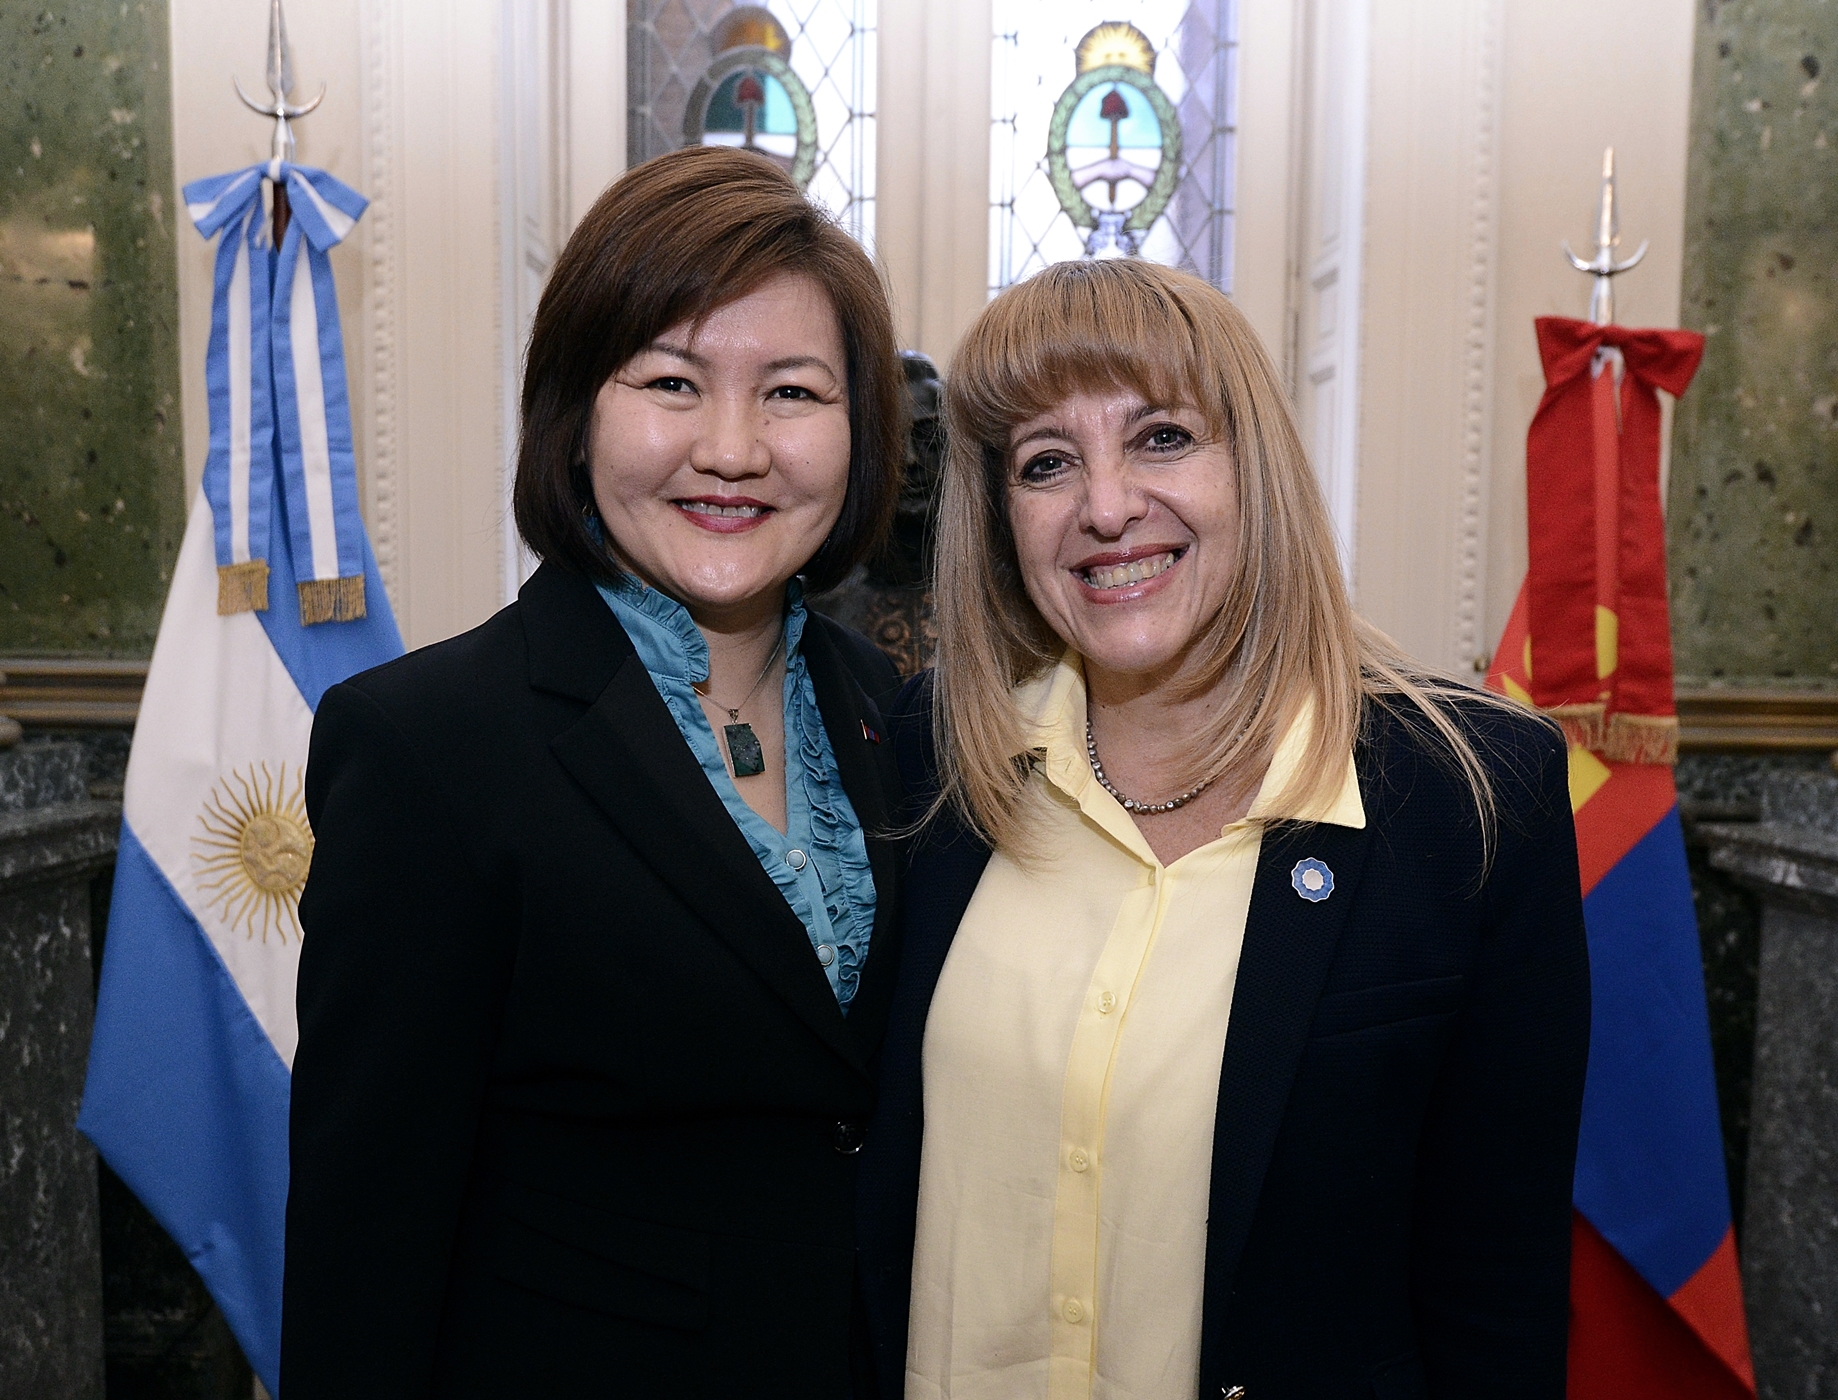 La Embajadora de Mongolia visitó la H. Cámara de Diputados